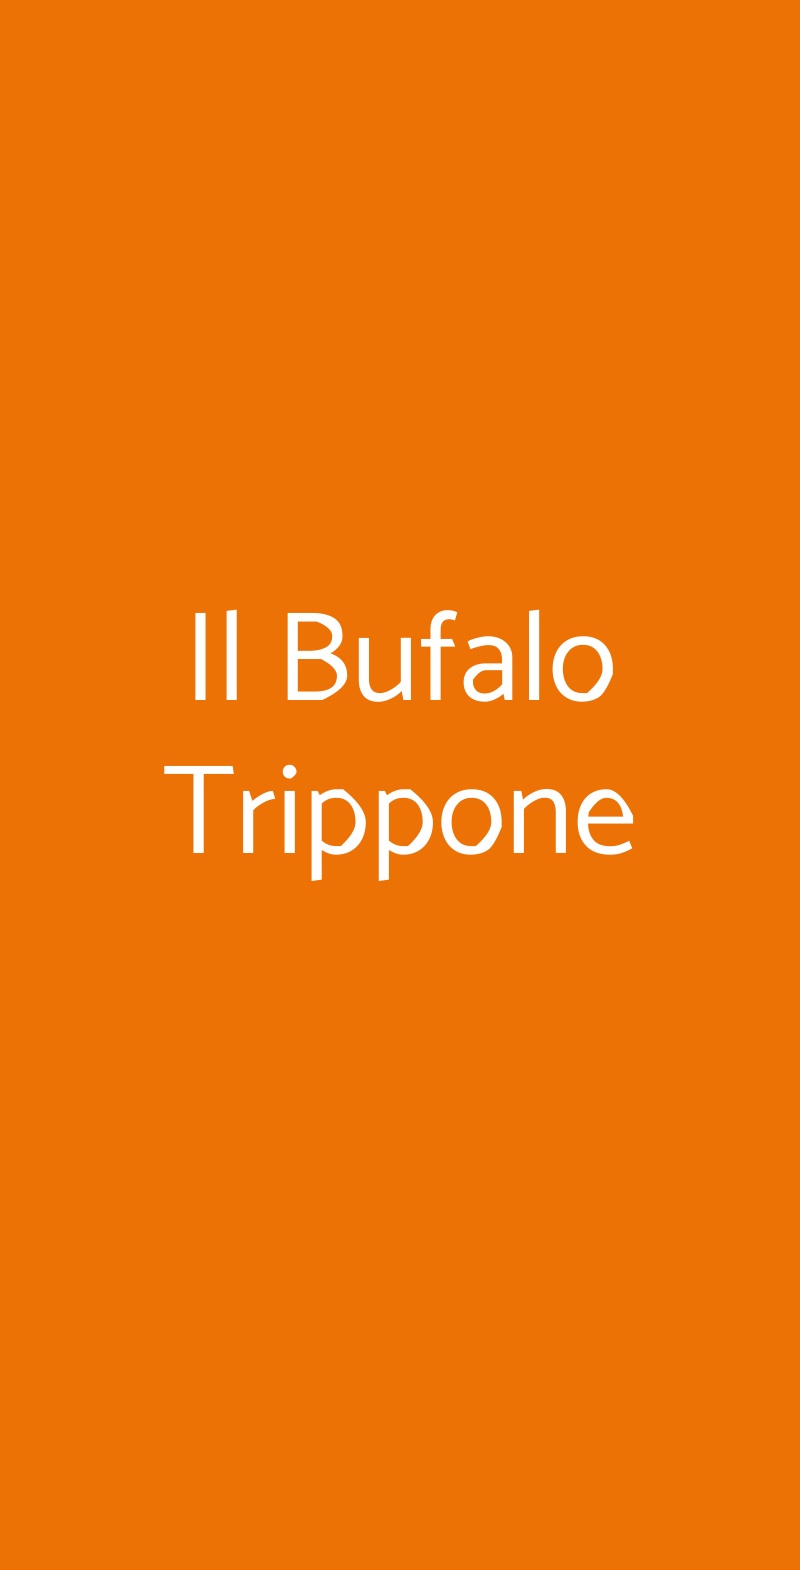 Il Bufalo Trippone Firenze menù 1 pagina